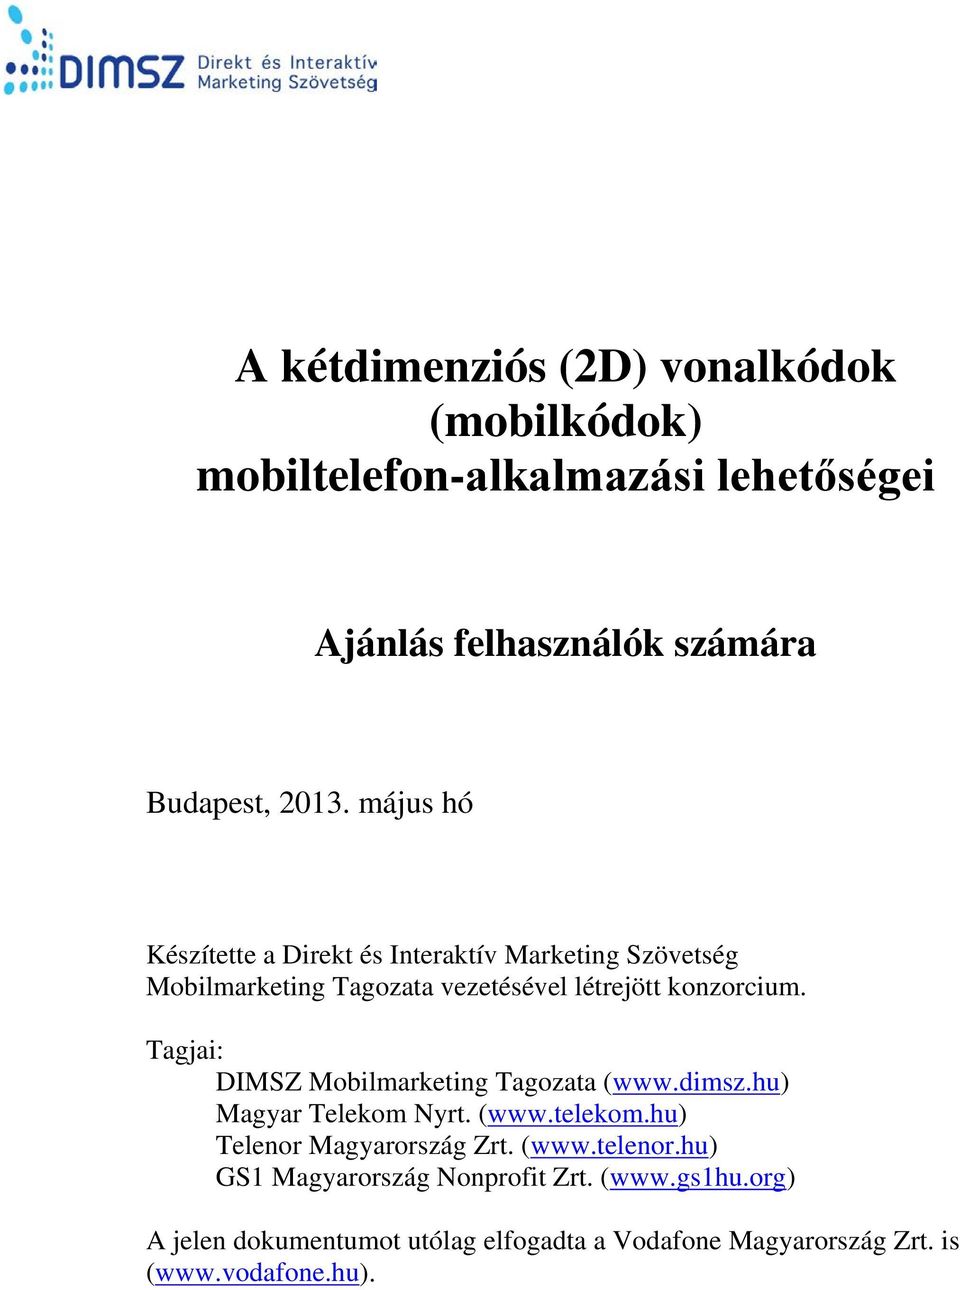 Tagjai: DIMSZ Mobilmarketing Tagozata (www.dimsz.hu) Magyar Telekom Nyrt. (www.telekom.hu) Telenor Magyarország Zrt. (www.telenor.